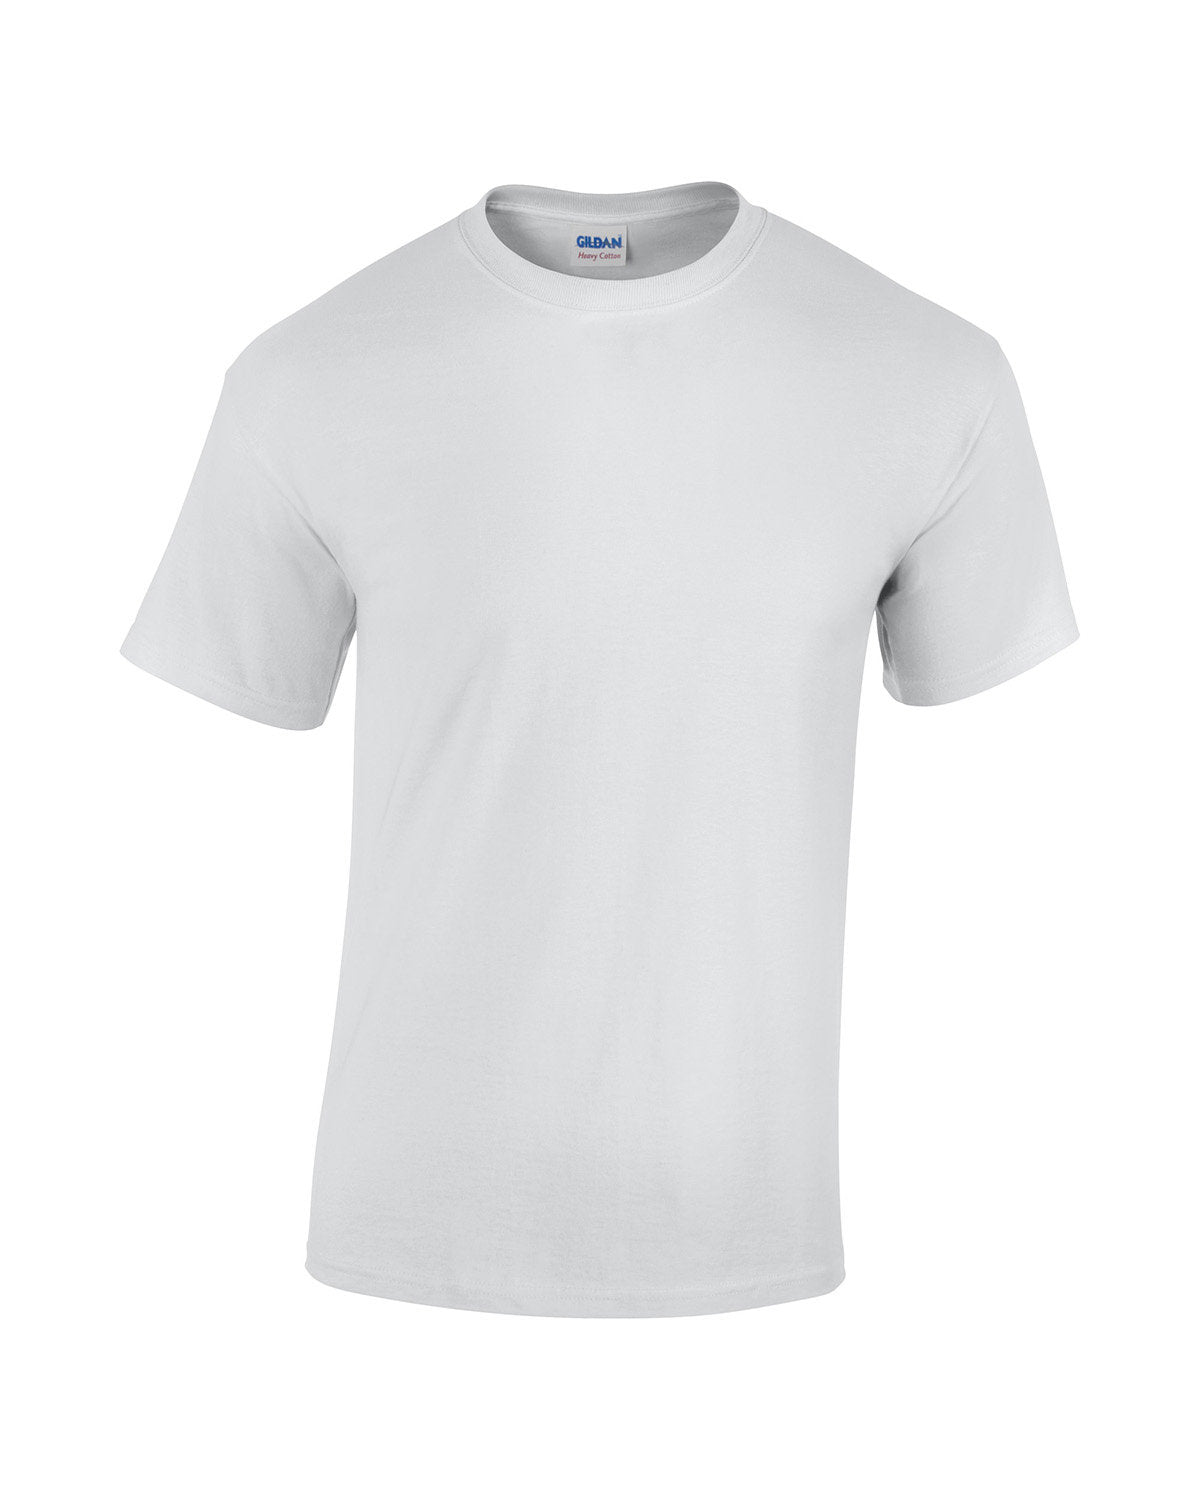 Custom white shirt